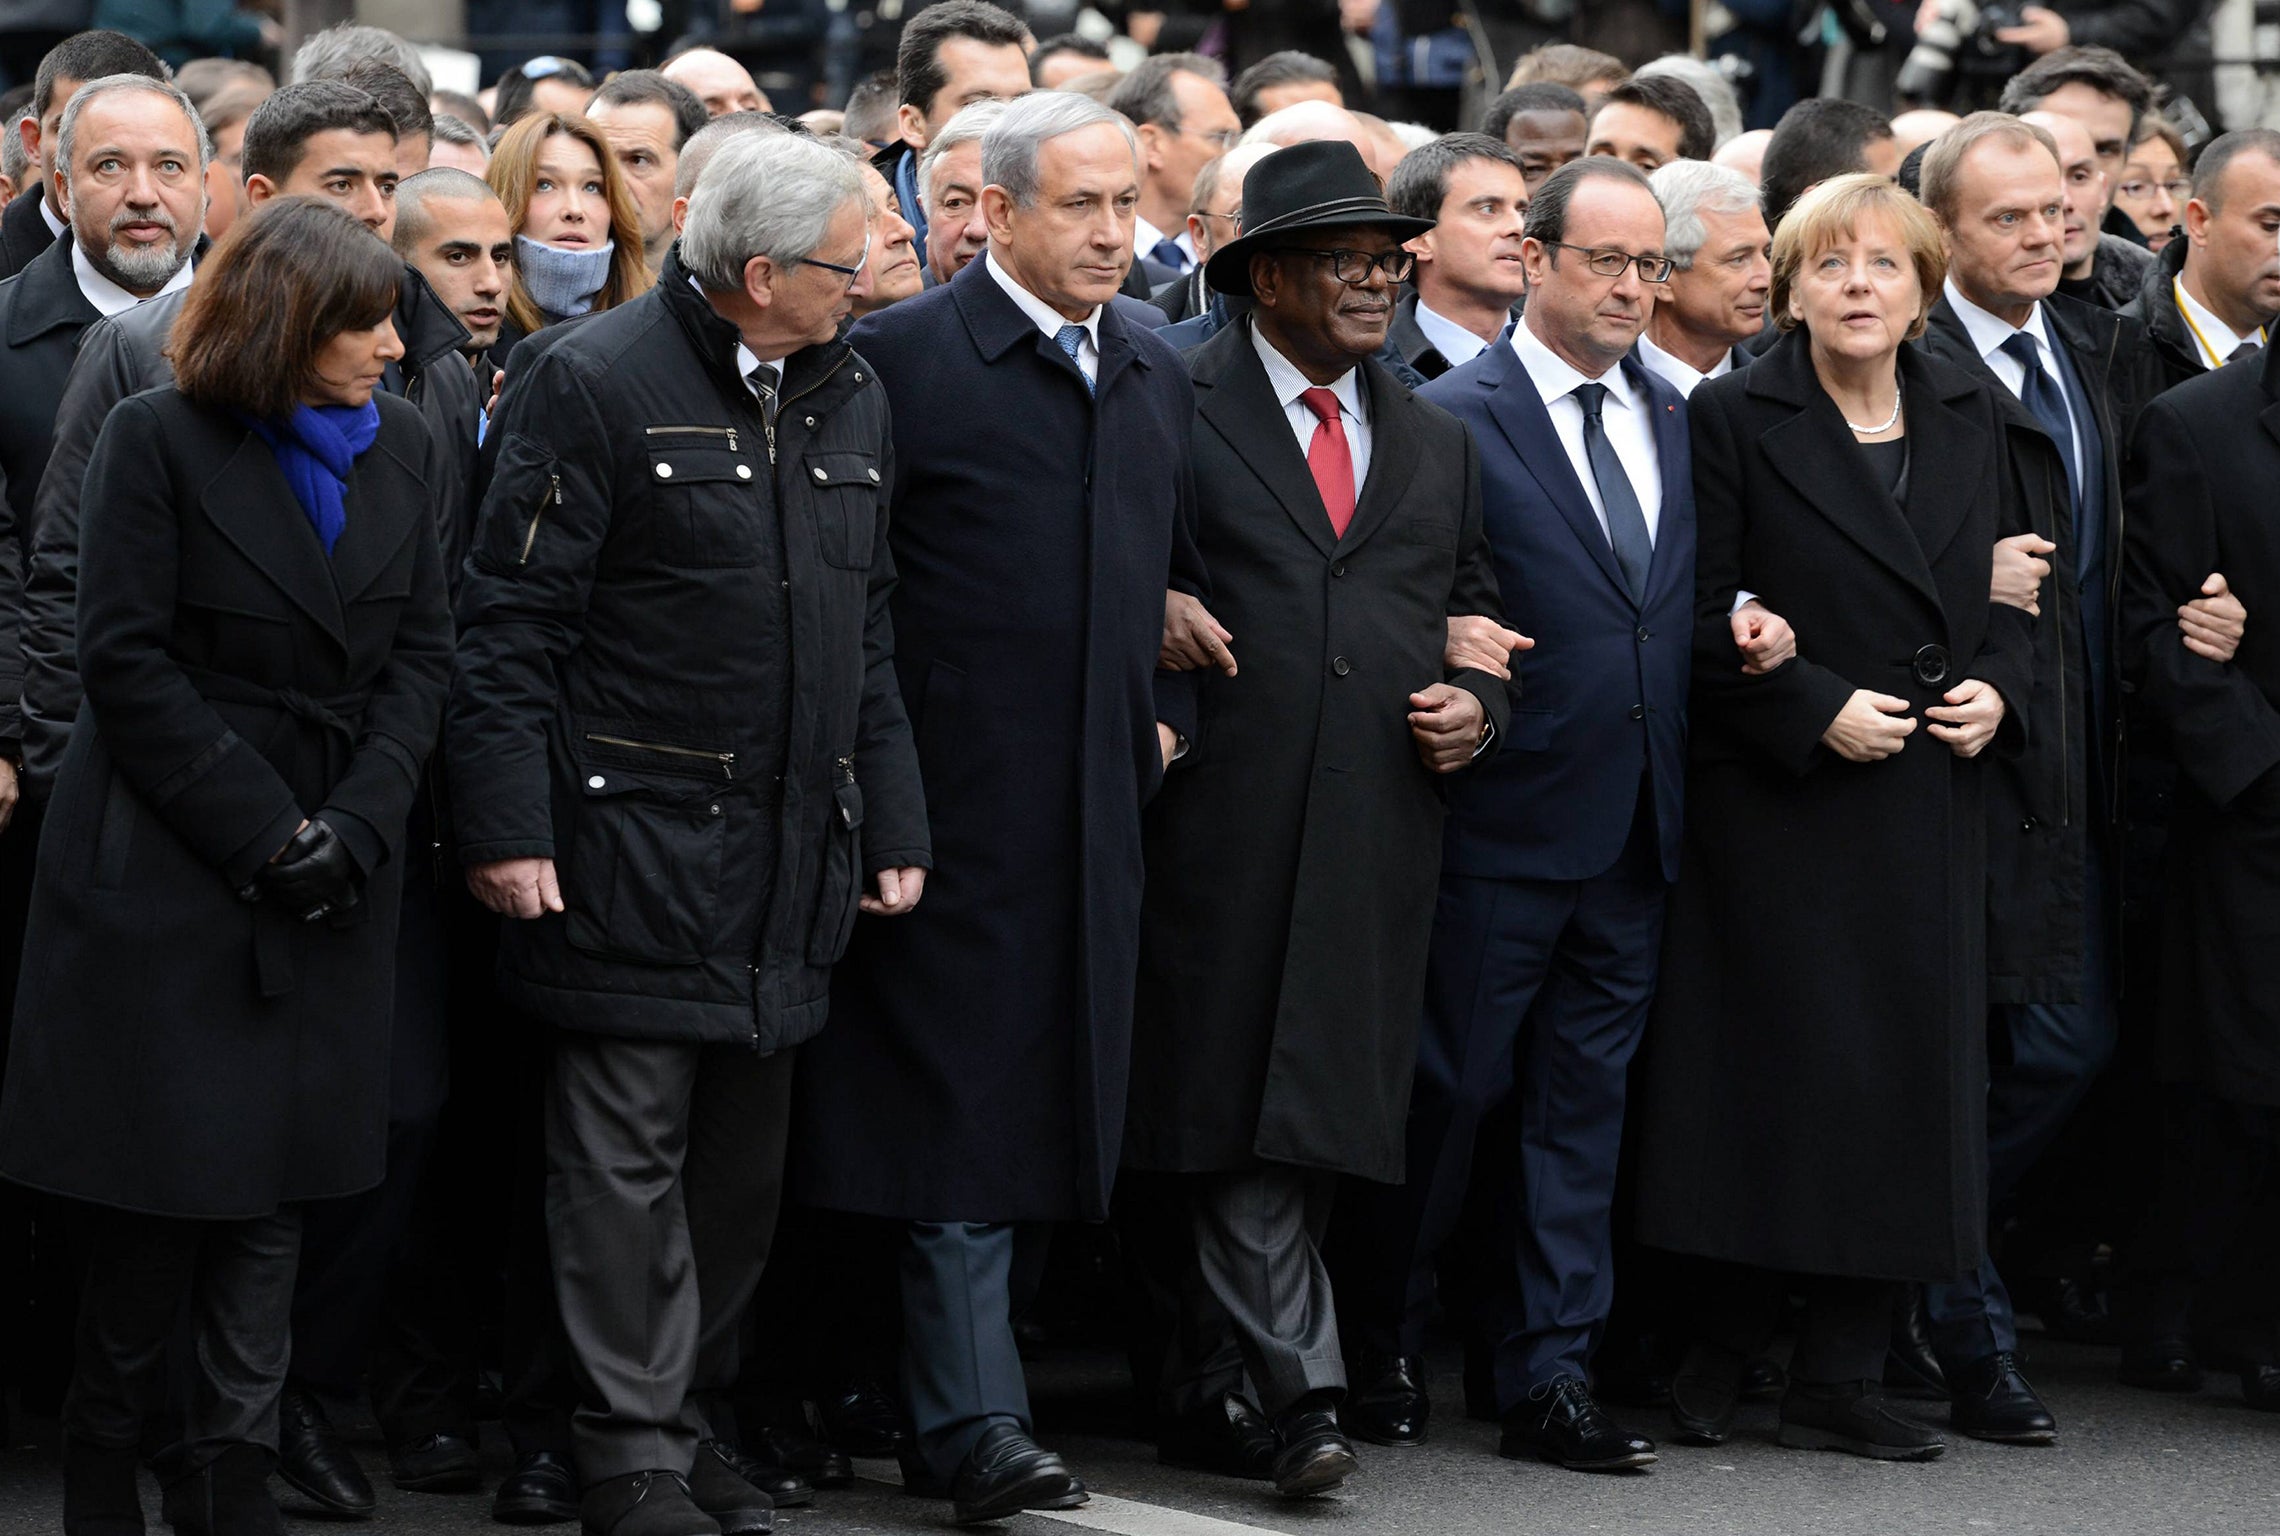 World leaders united in Paris to stand shoulder to shoulder against terrorism